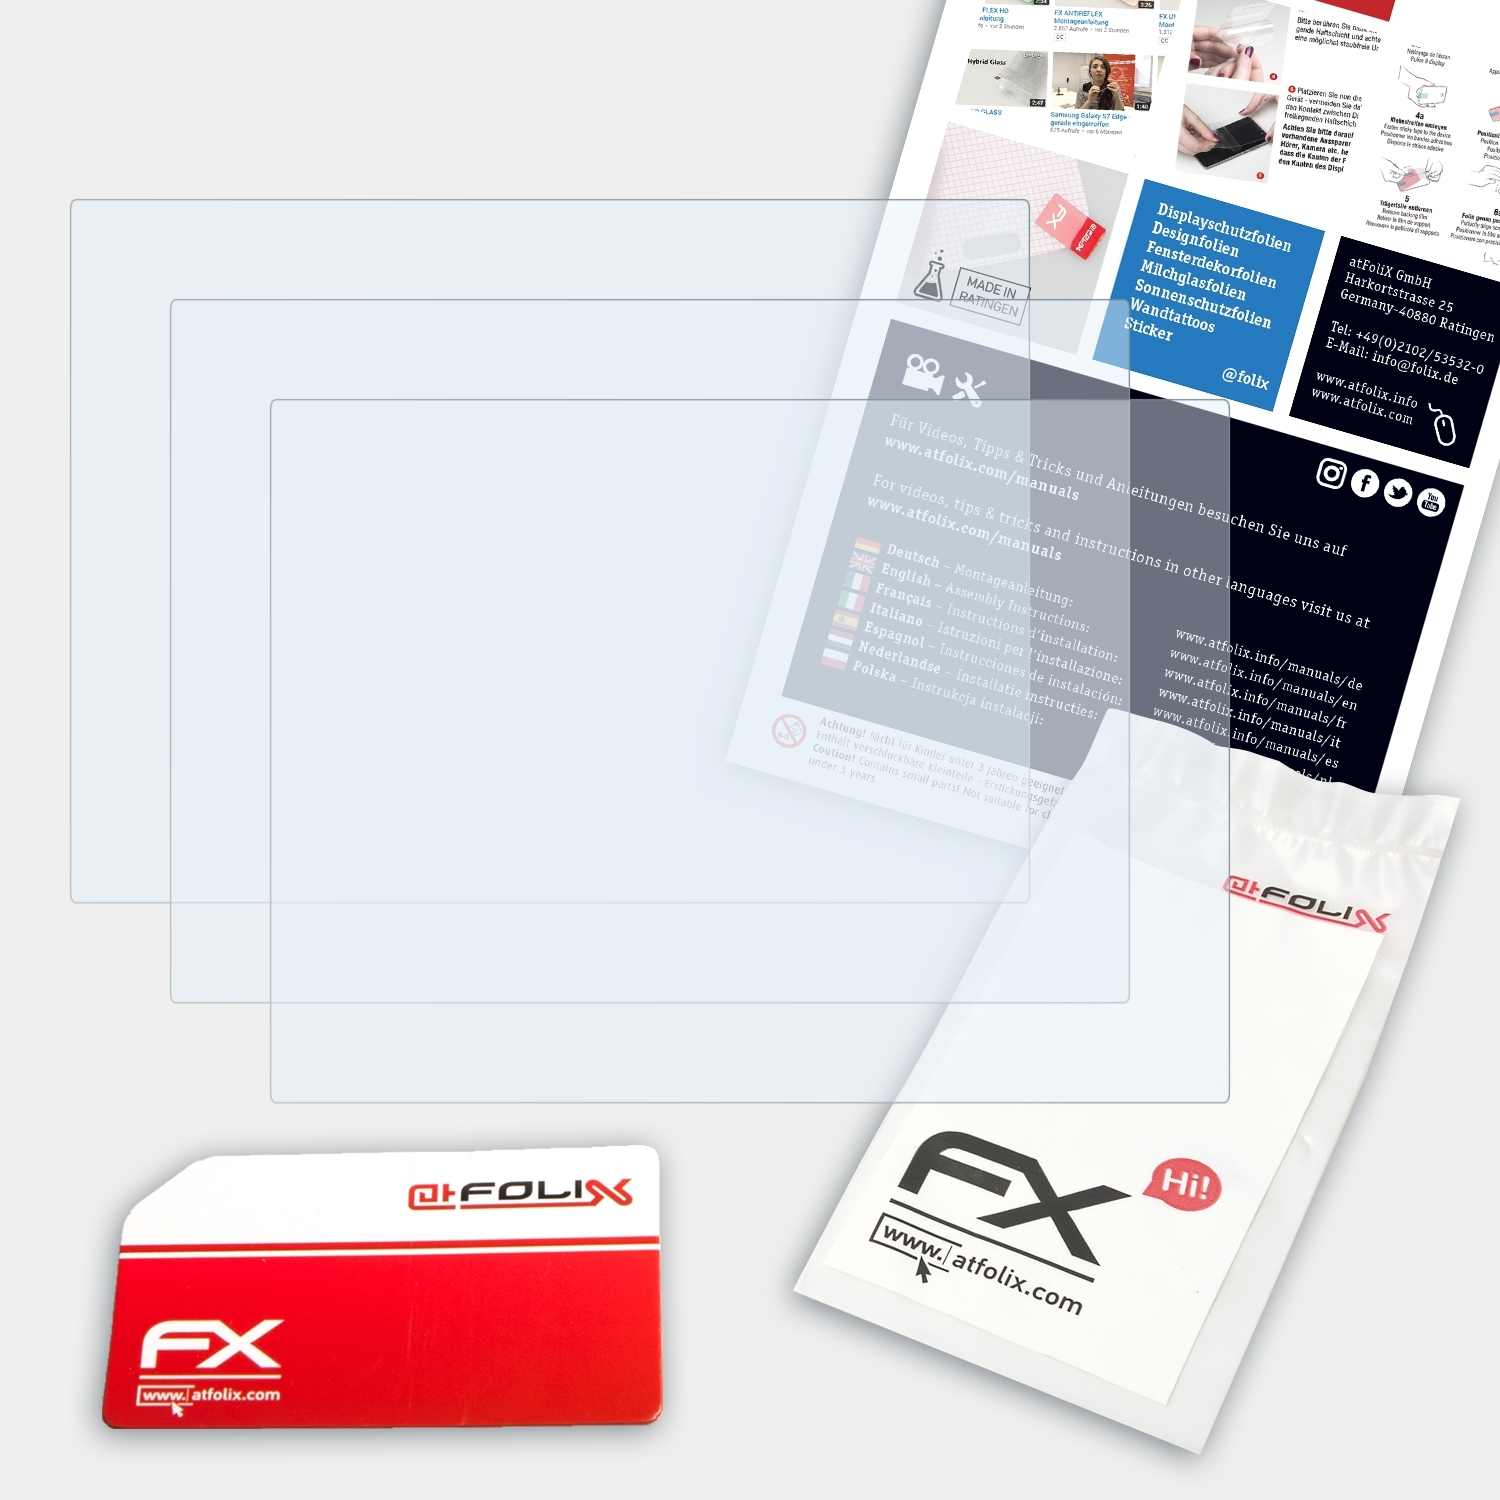 ATFOLIX 3x FX-Clear Displayschutz(für Sony a7 III) Alpha